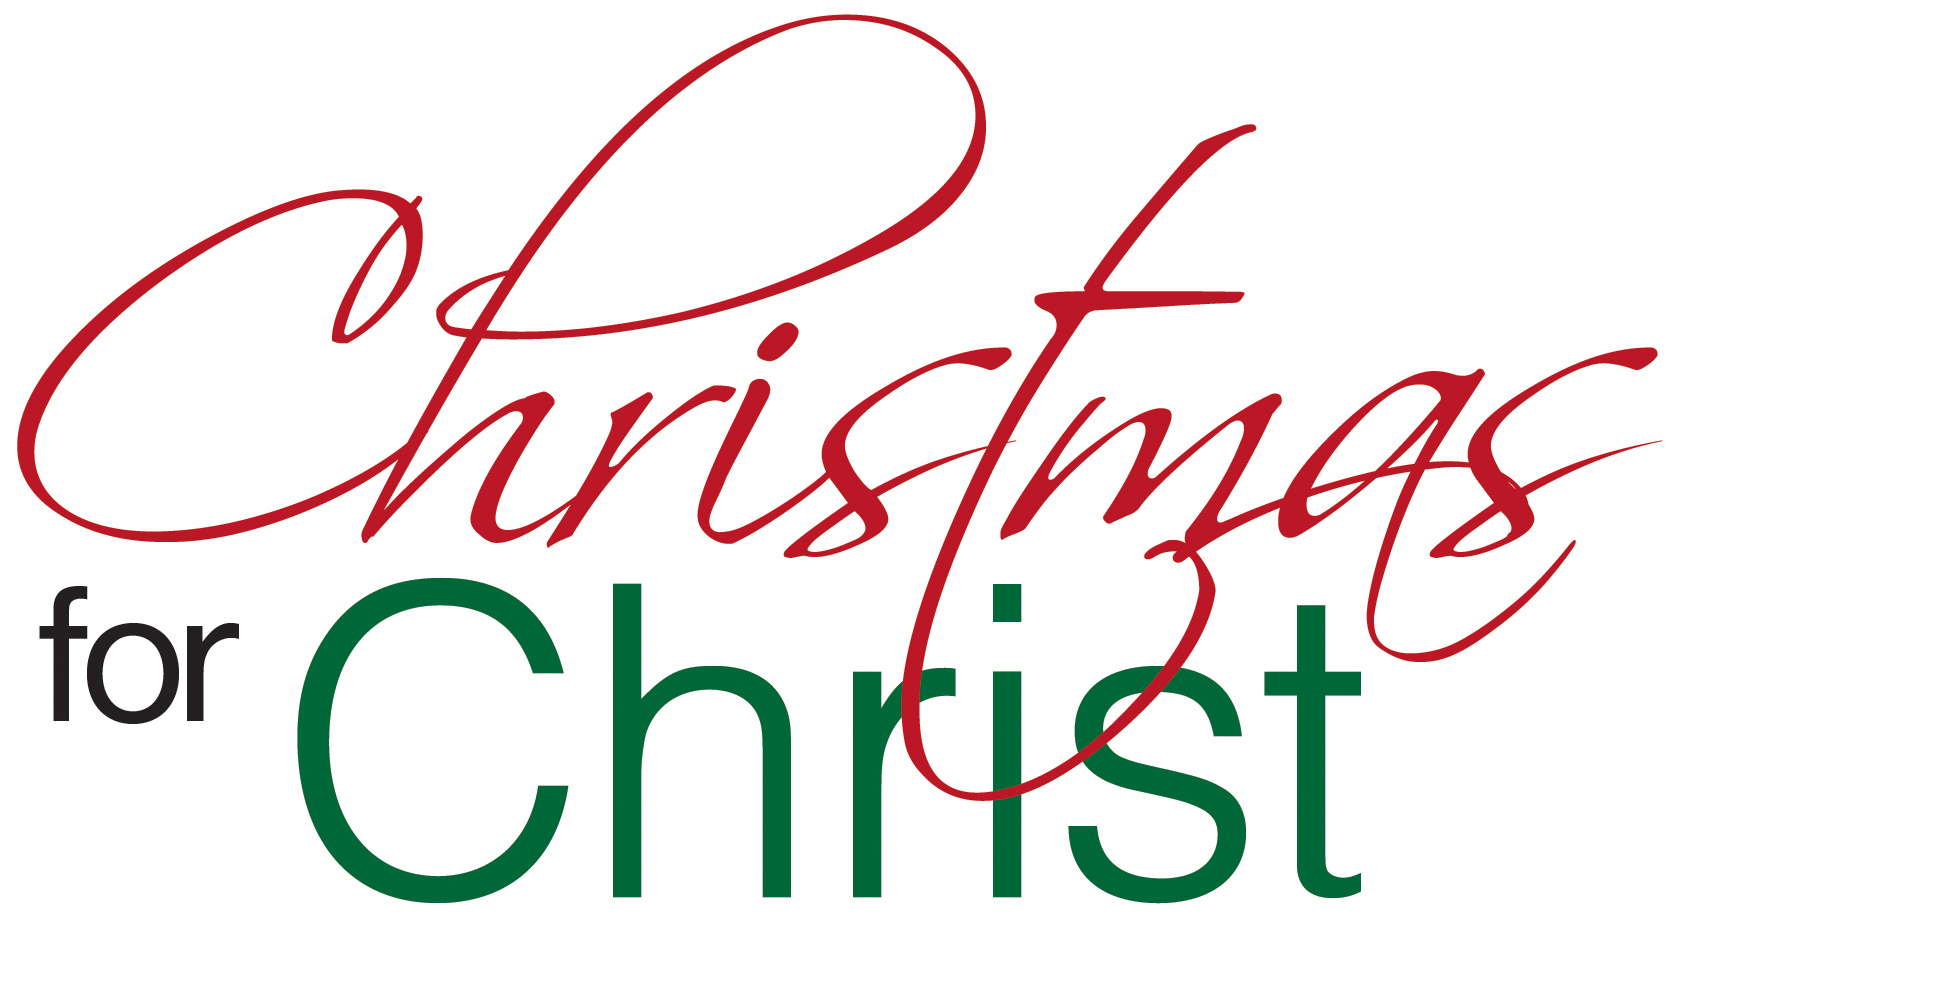 Christian Christmas Nail Art Tutorial - wide 2